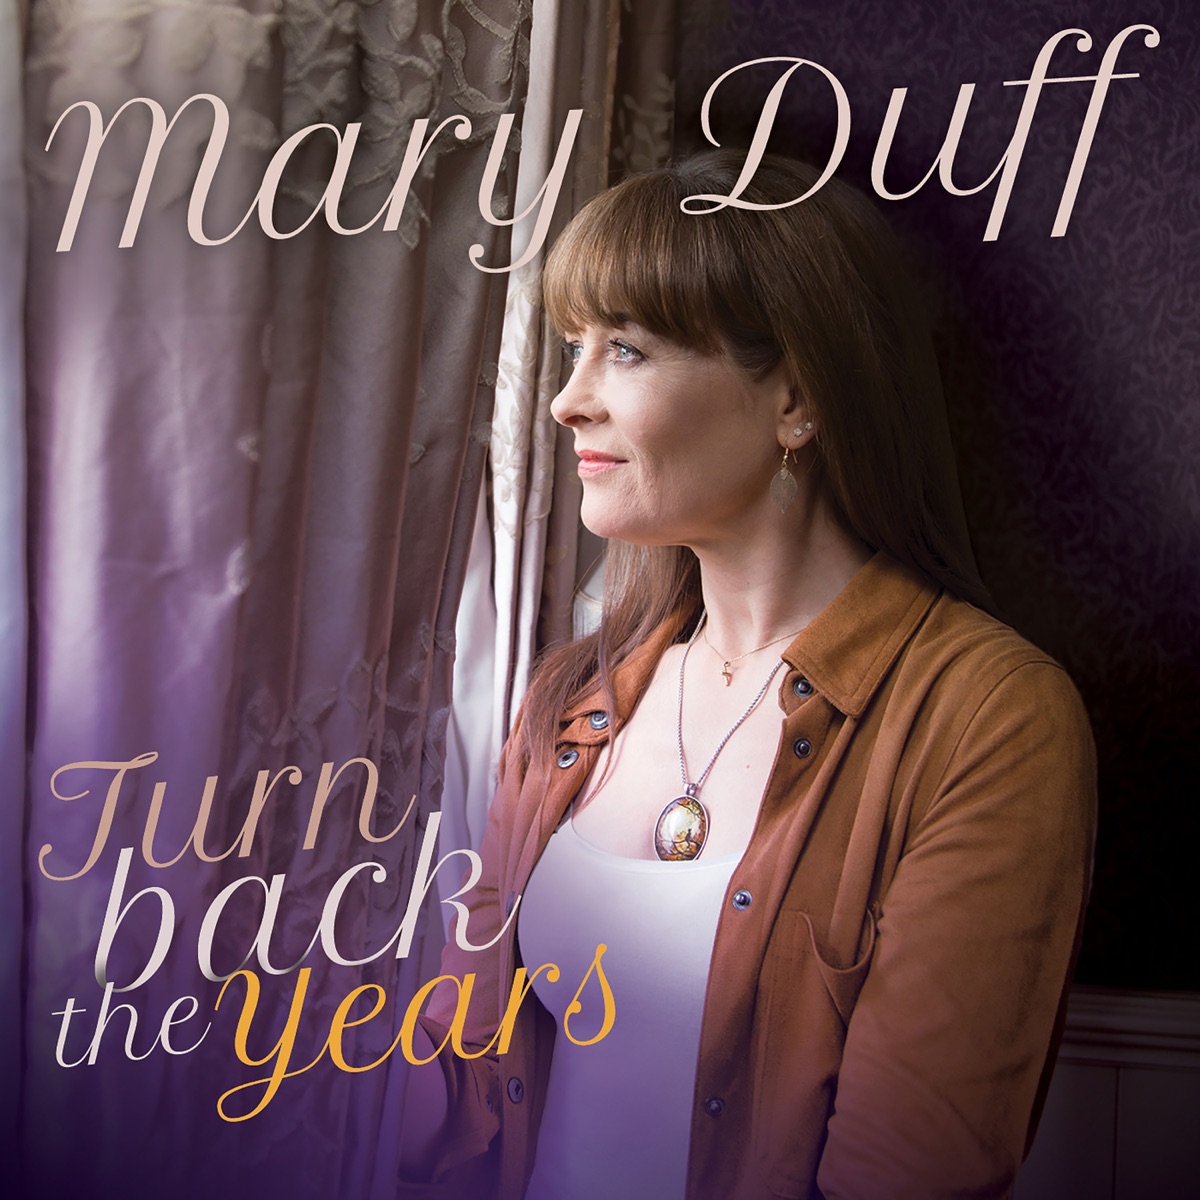 Verleiden Vergemakkelijken Spruit When Your Old Wedding Ring Was New by Mary Duff on Apple Music